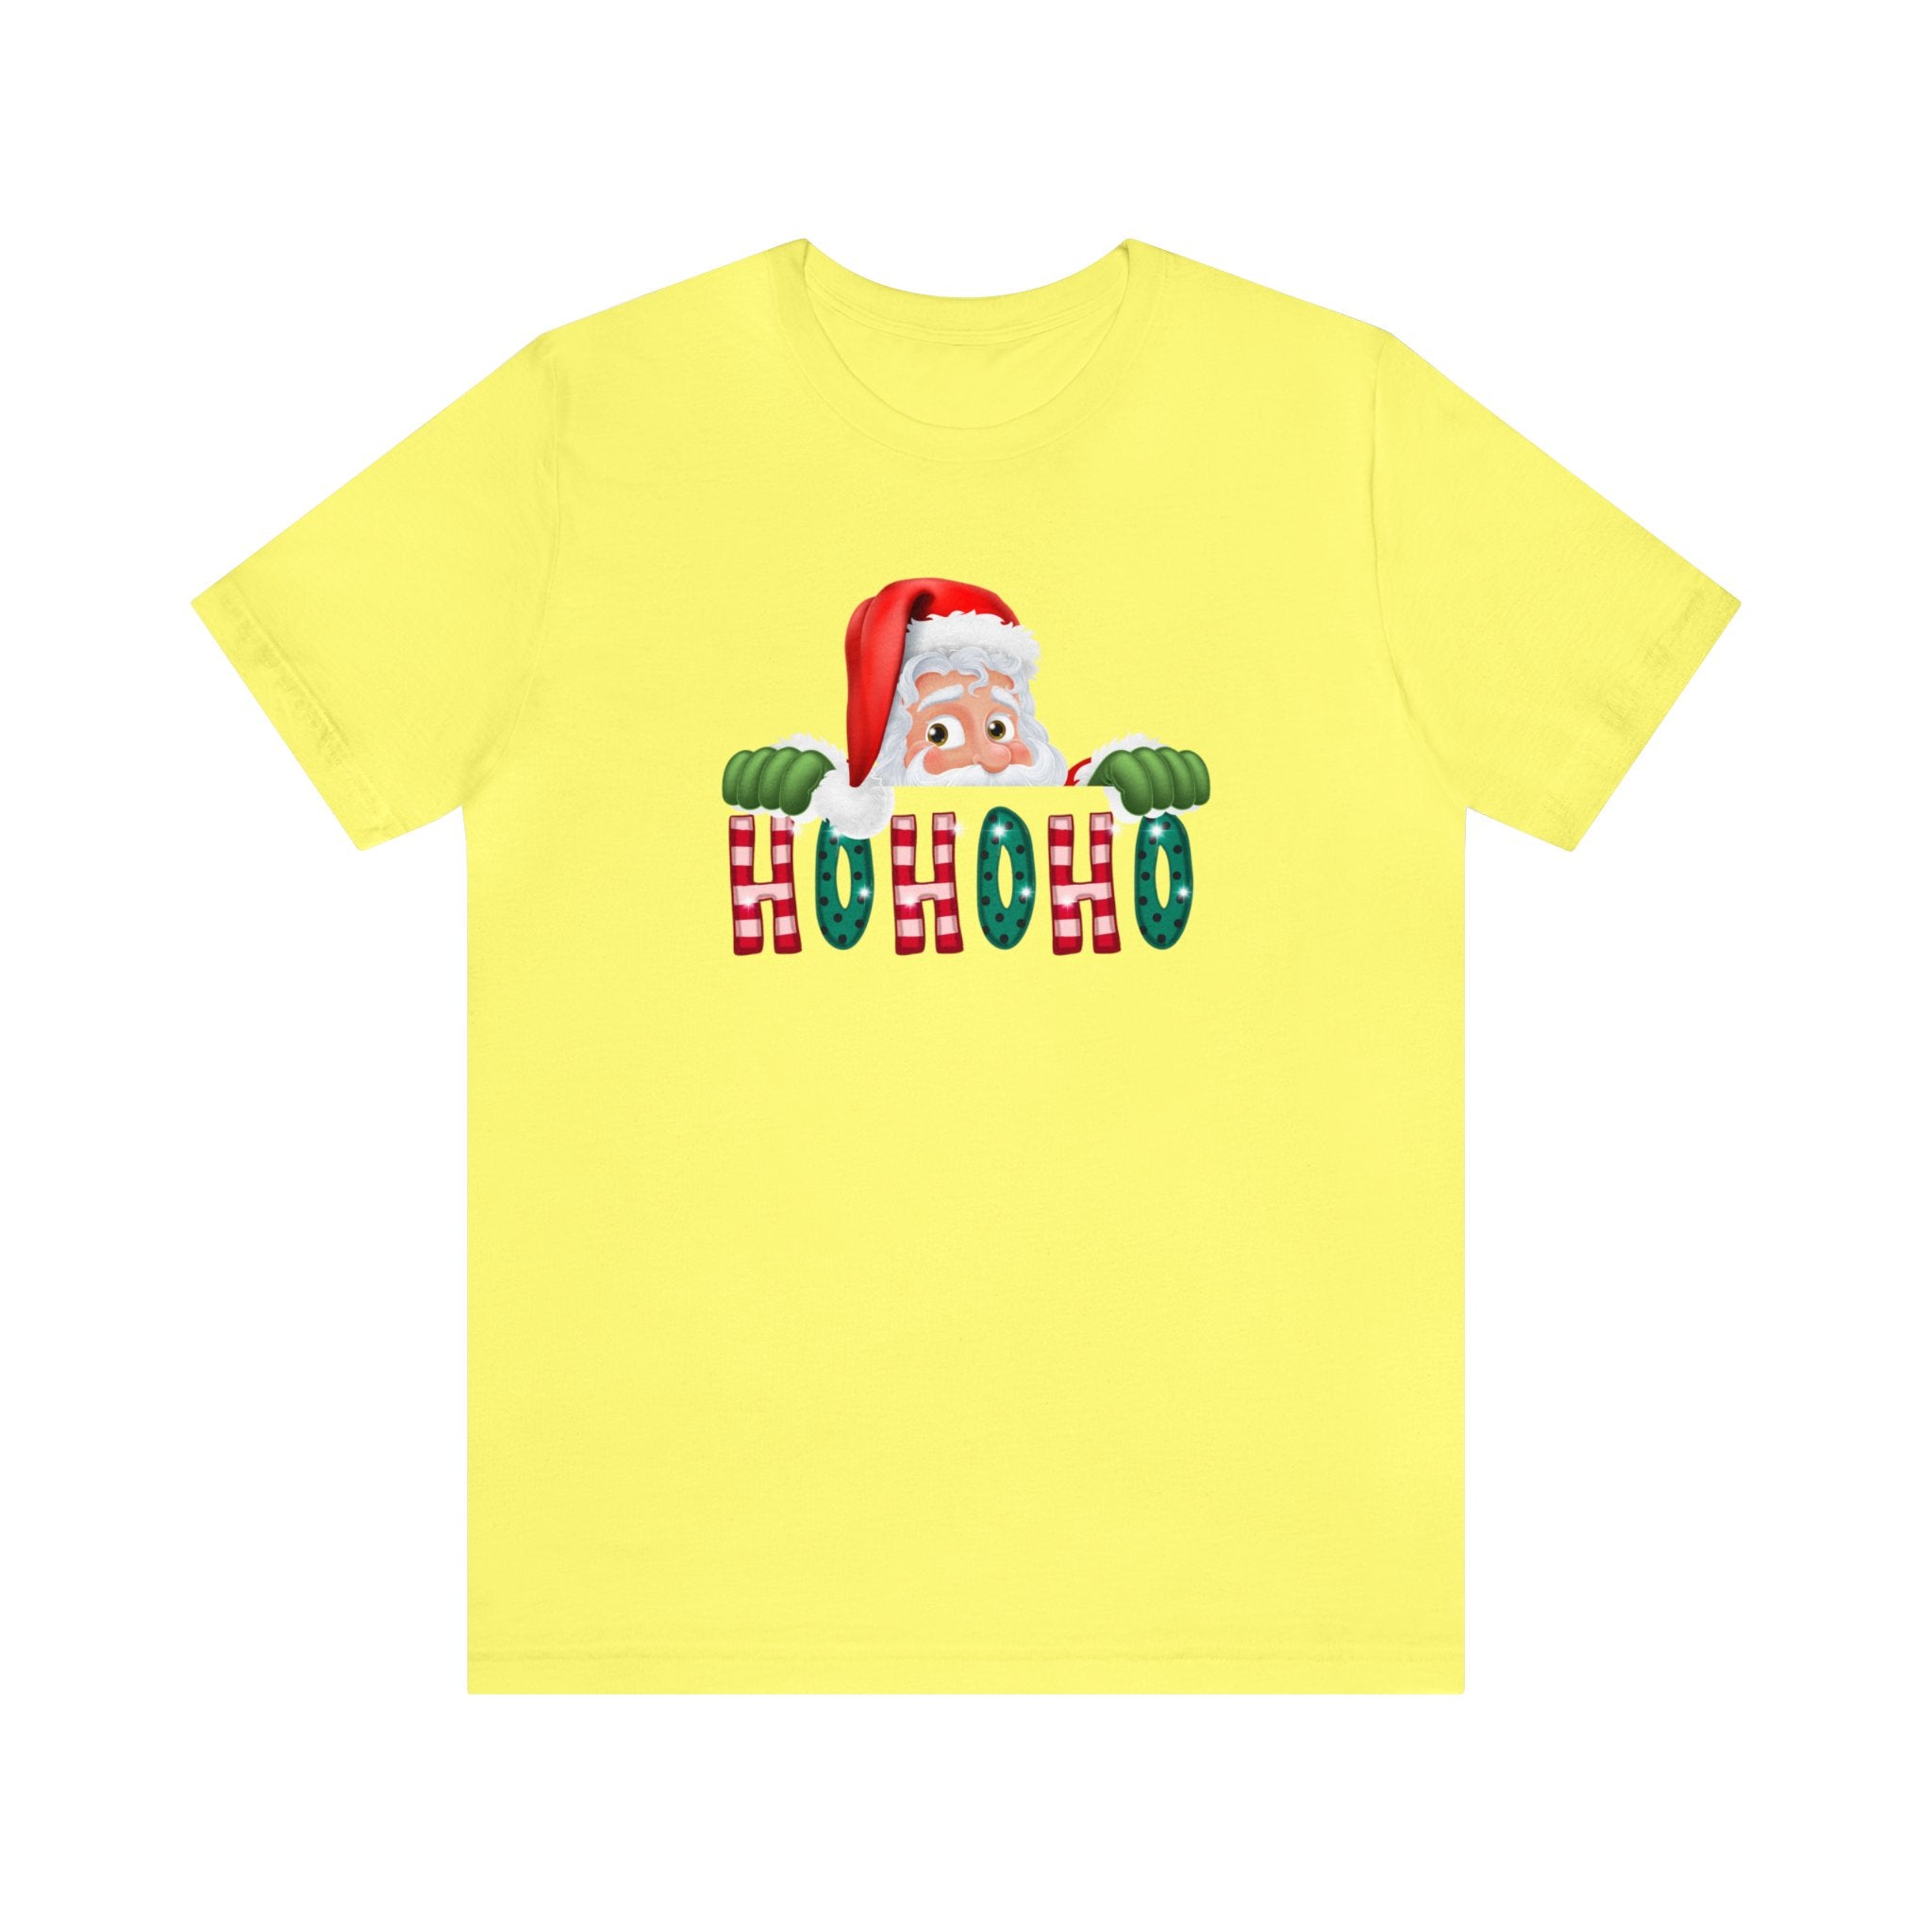 Peaking Santa : Unisex 100% Comfy Cotton, T-Shirt by Bella+Canvas